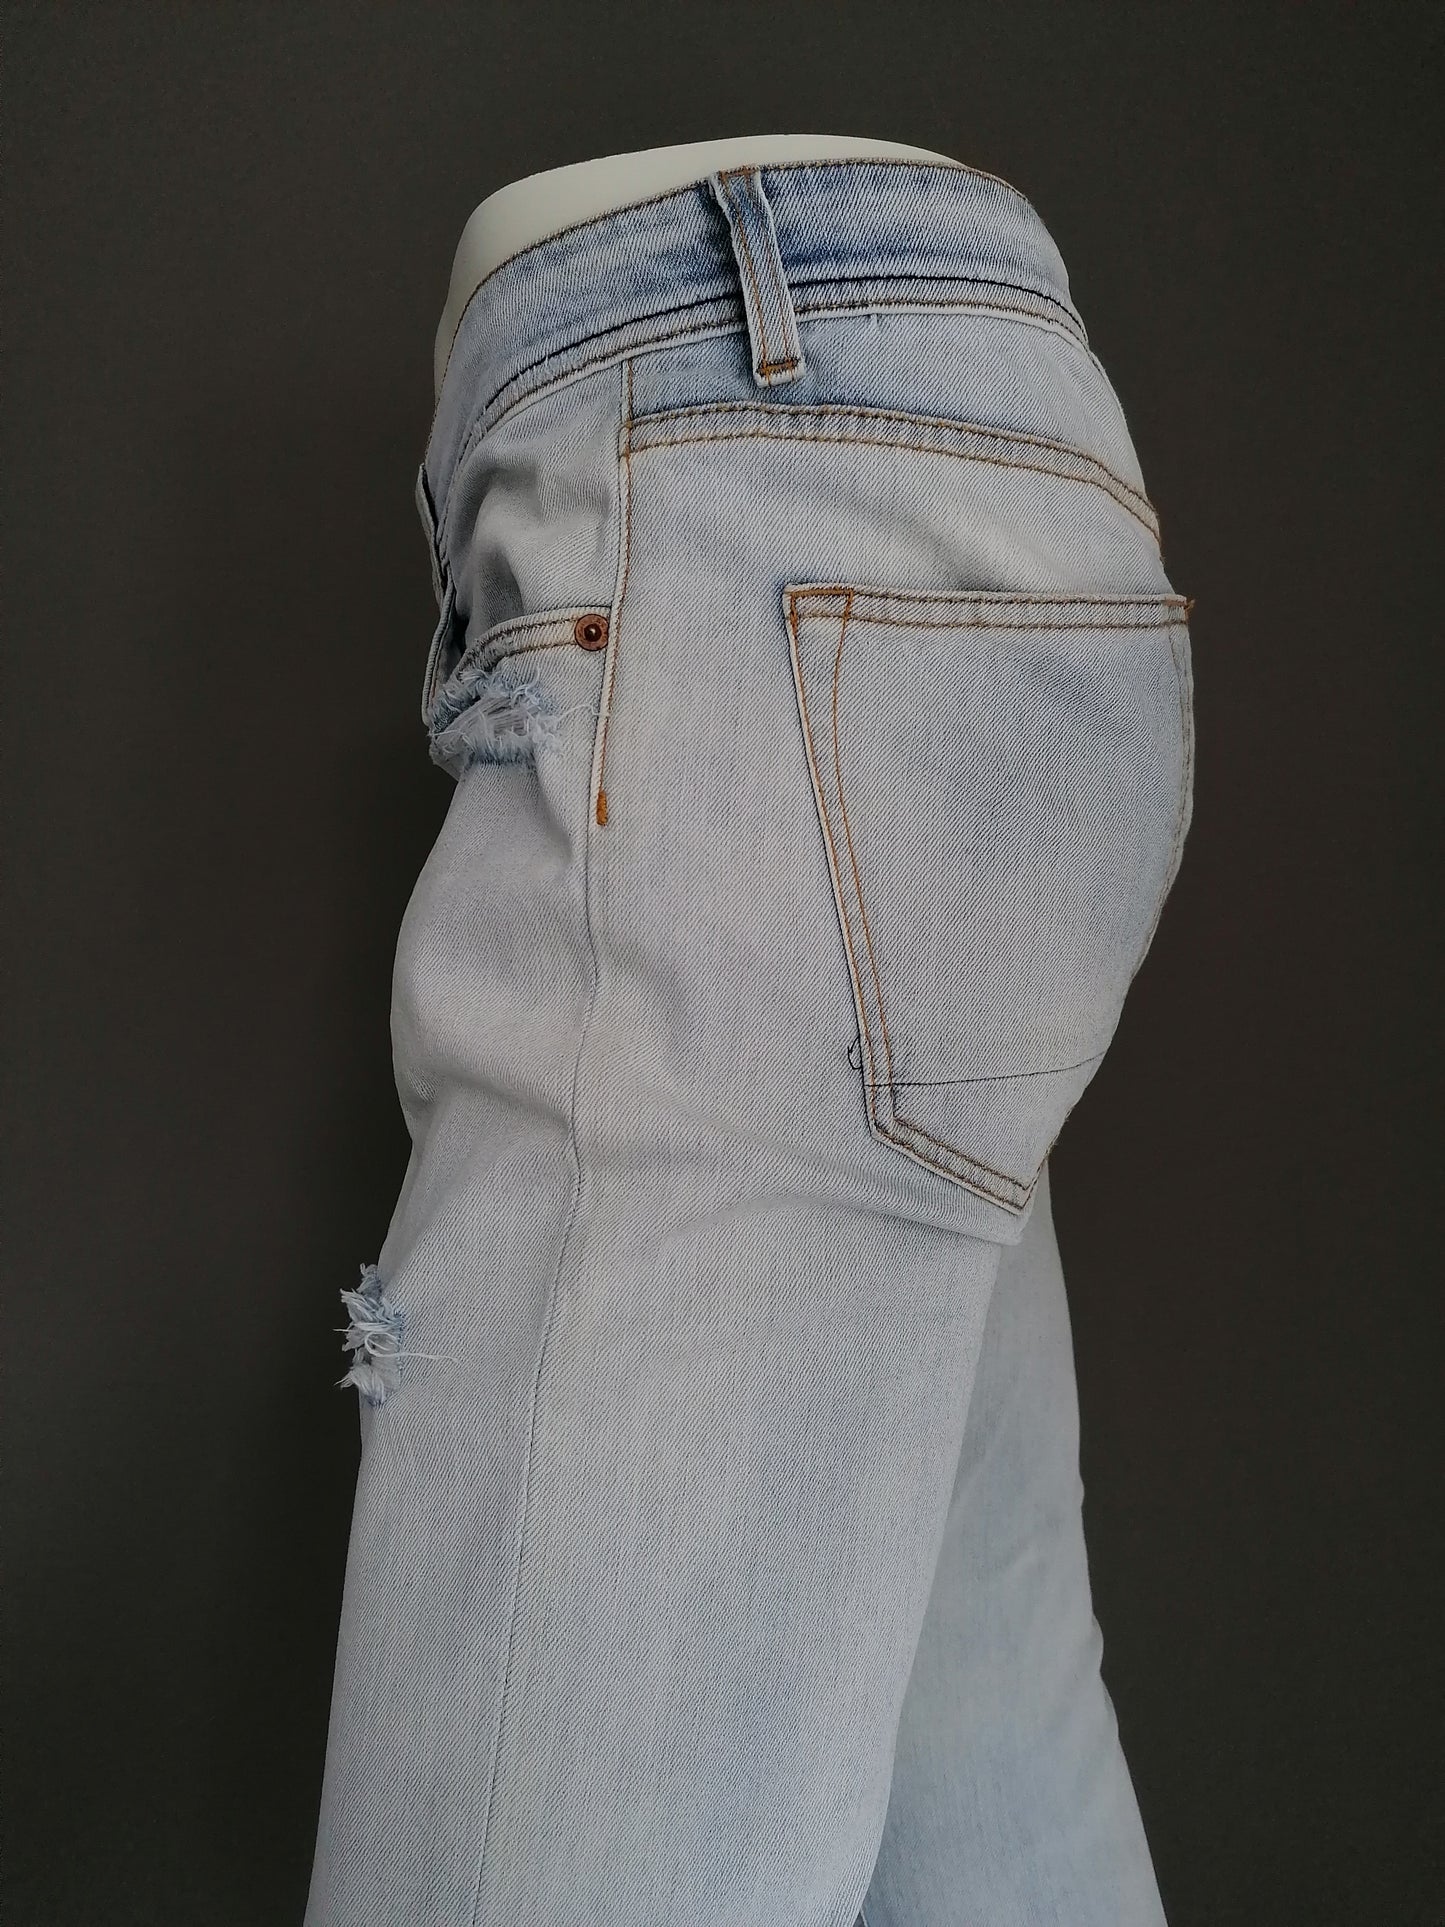 Reinado jeans. Azul claro coloreado. Tamaño W32 - L34. Estirar